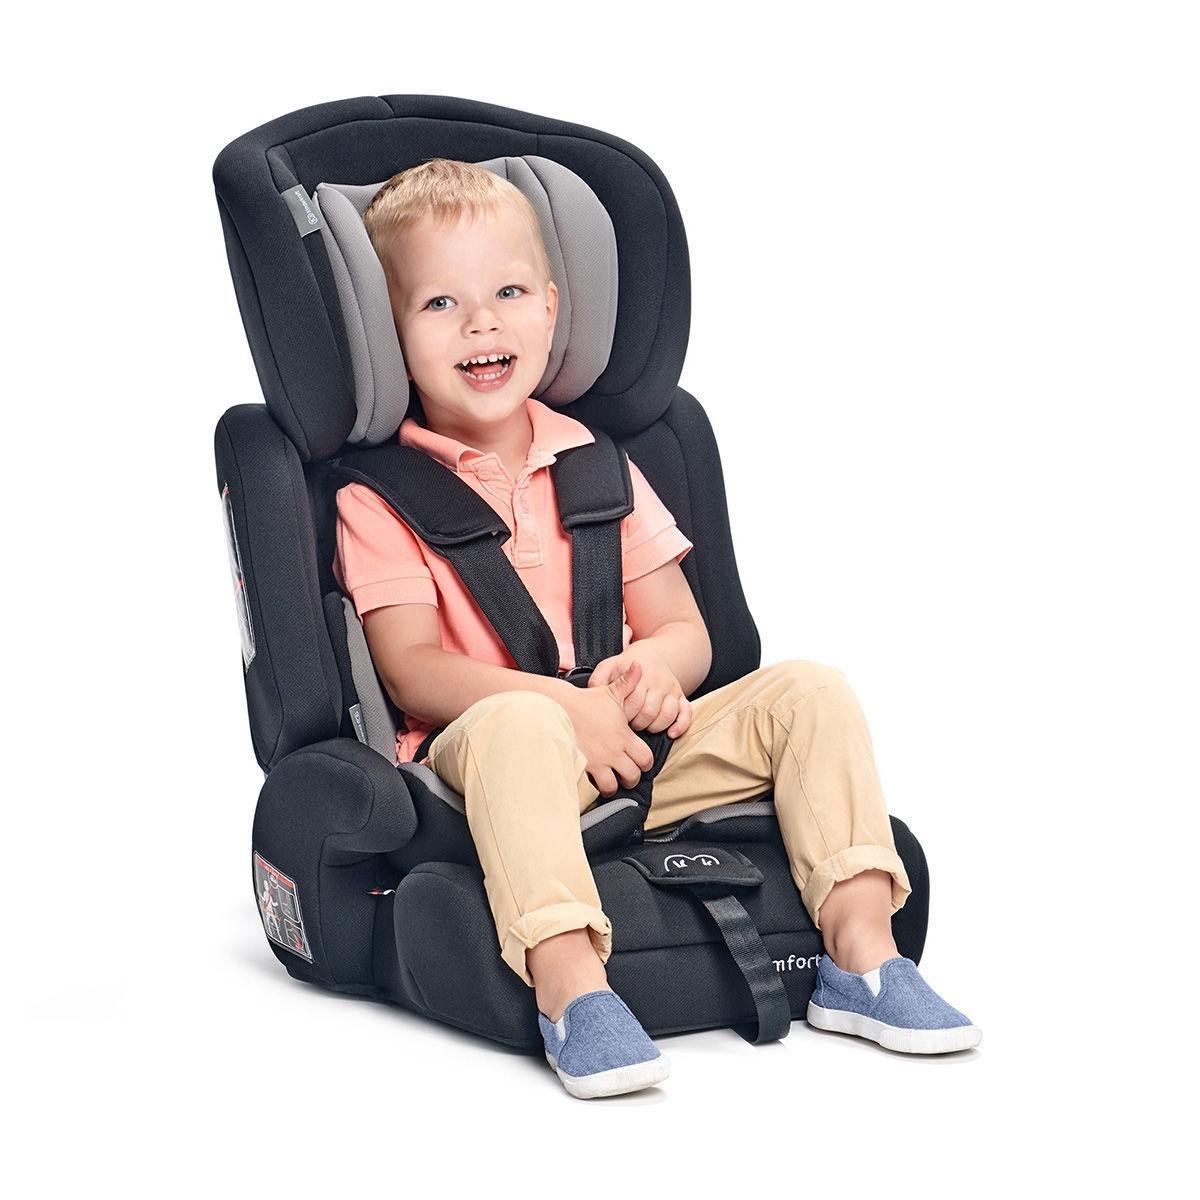 Kinderkraft Autostoel Comfort Up - - Roze